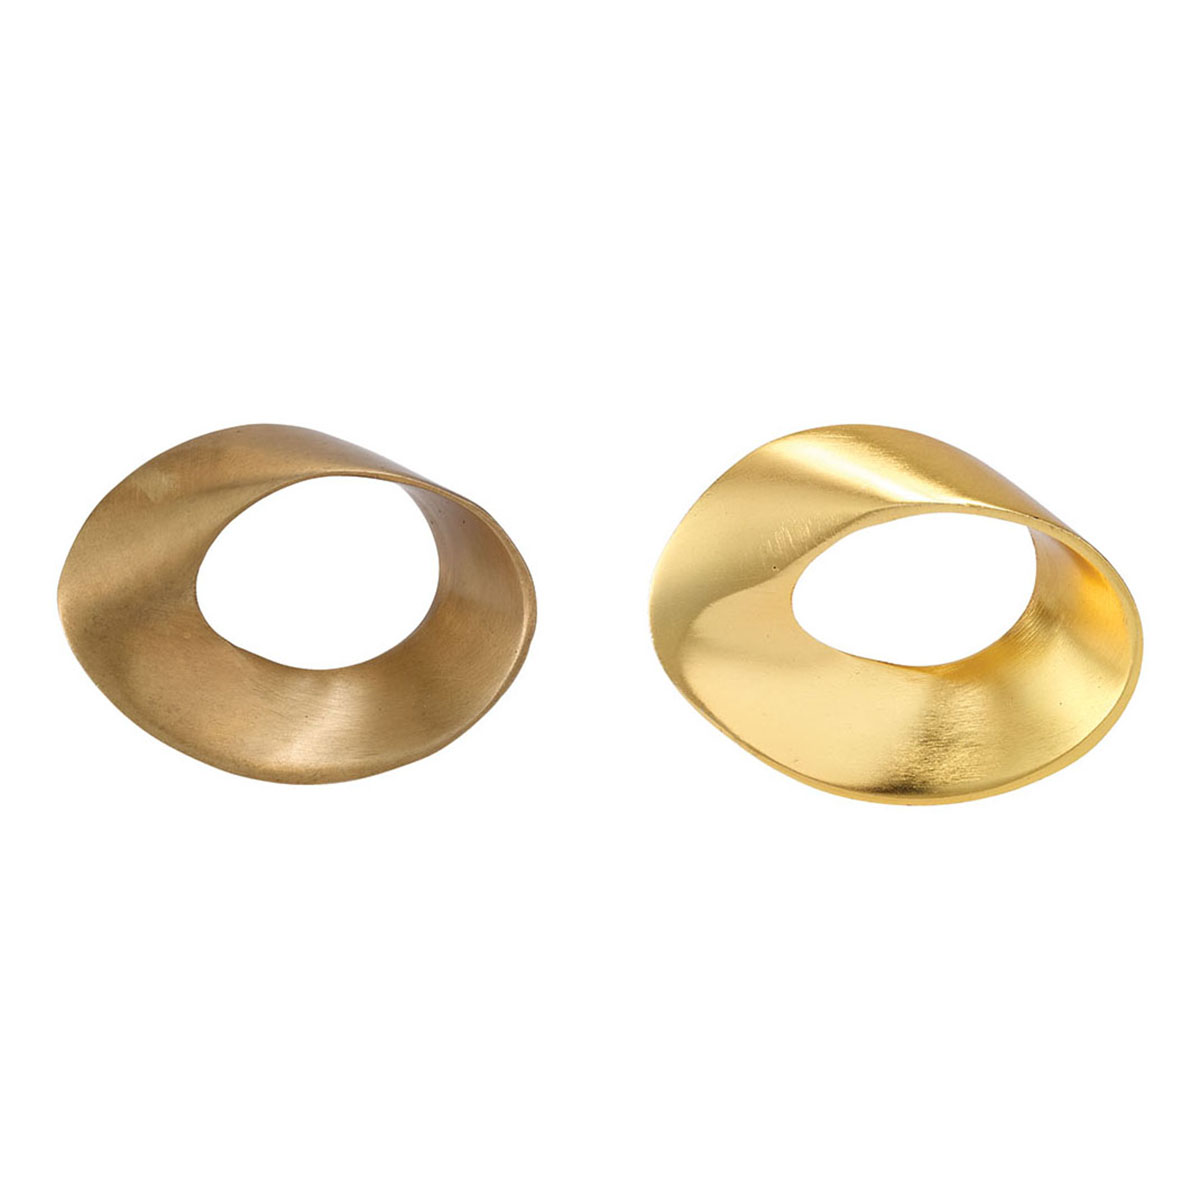 Bodrum Morgan Napkin Ring - Set of 4 - Shop at Destry Darr Designs.